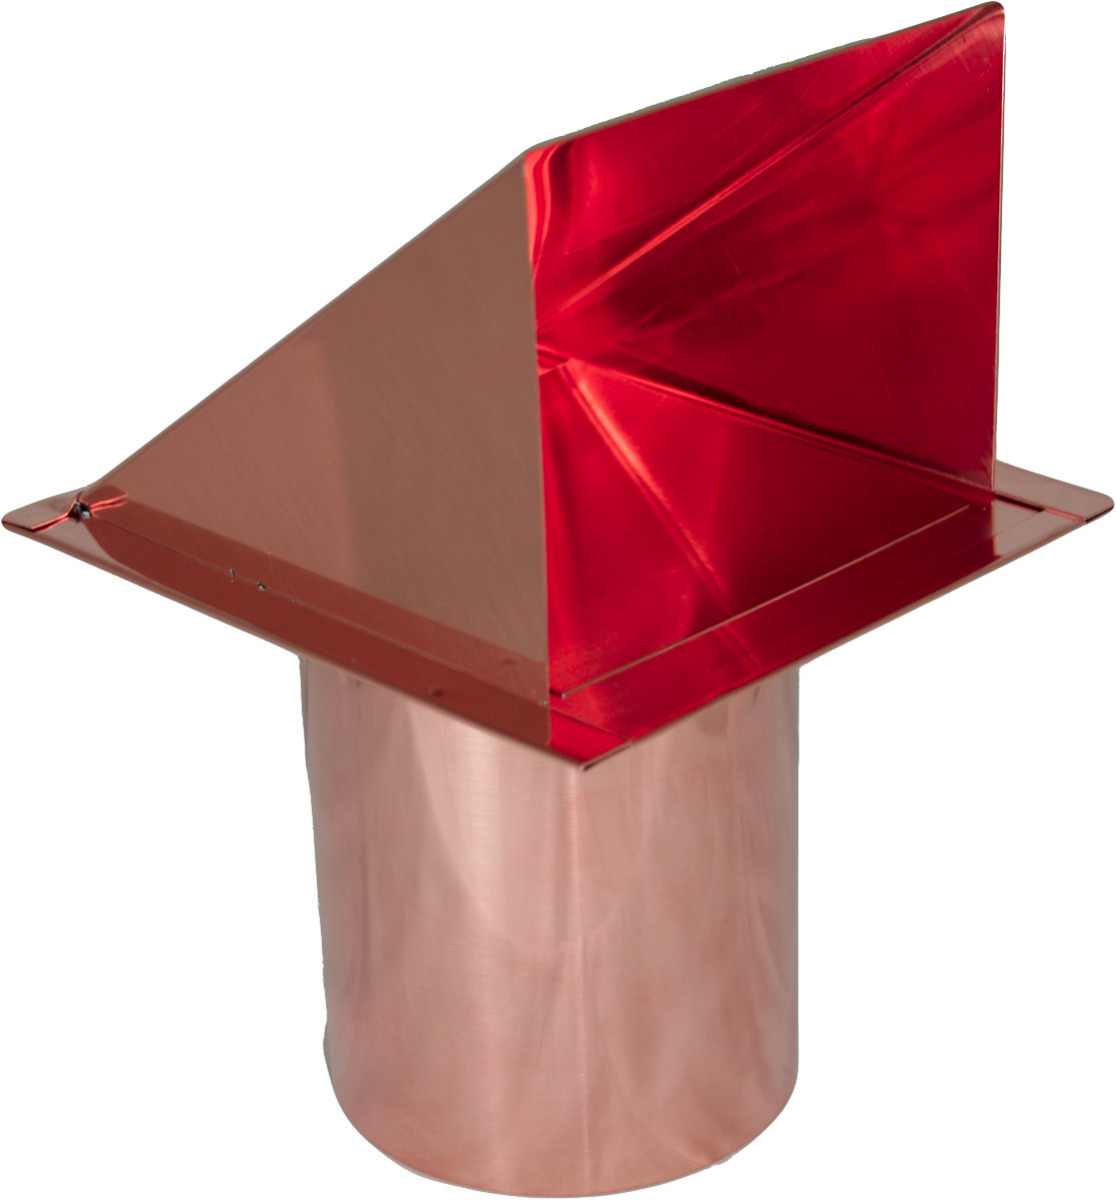 copper 4 inch dryer vent cap with damper